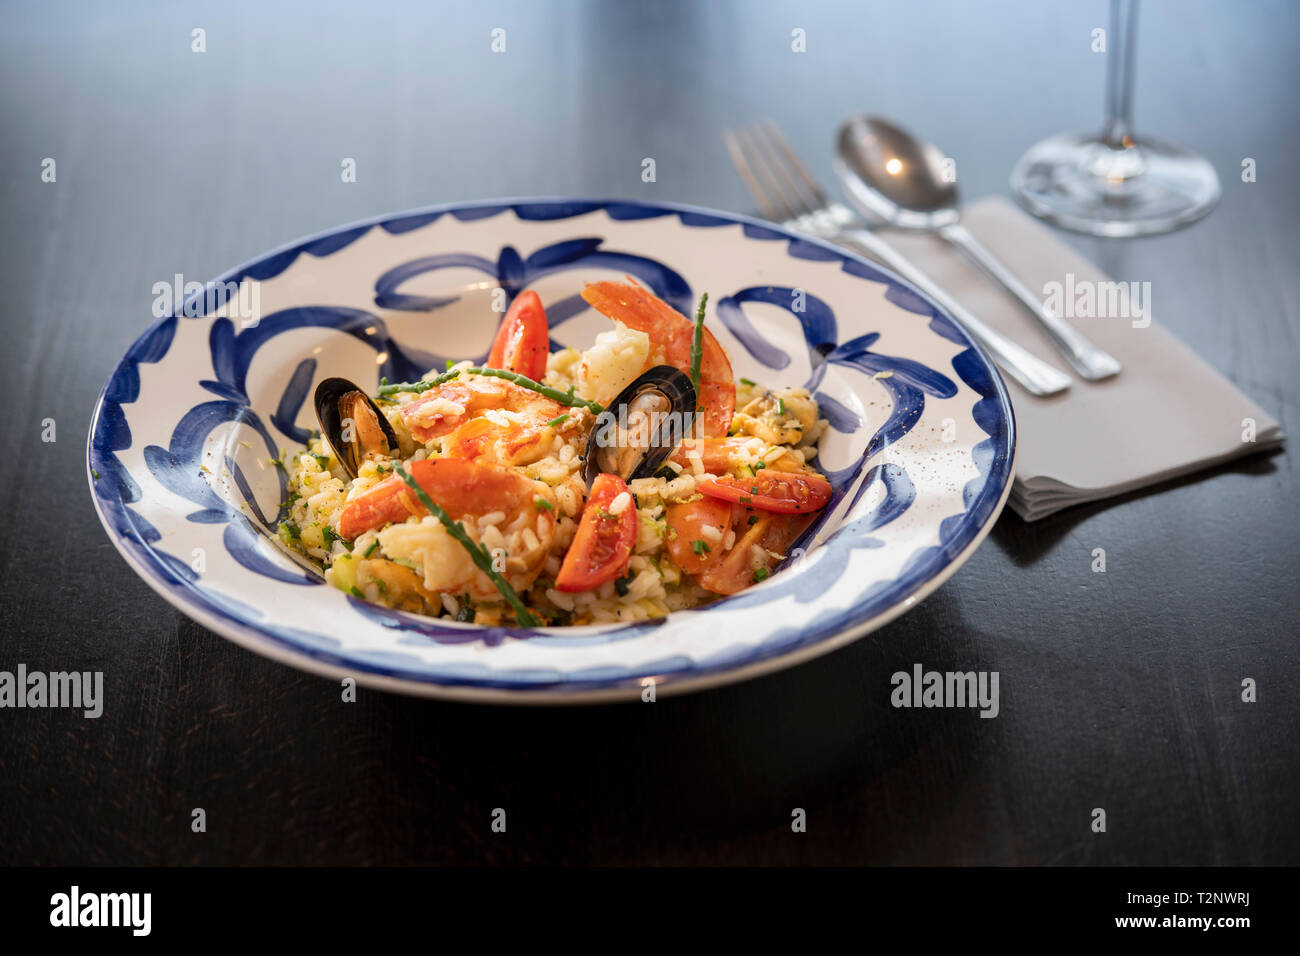 Paella at Italian Restaurant Stock Photo